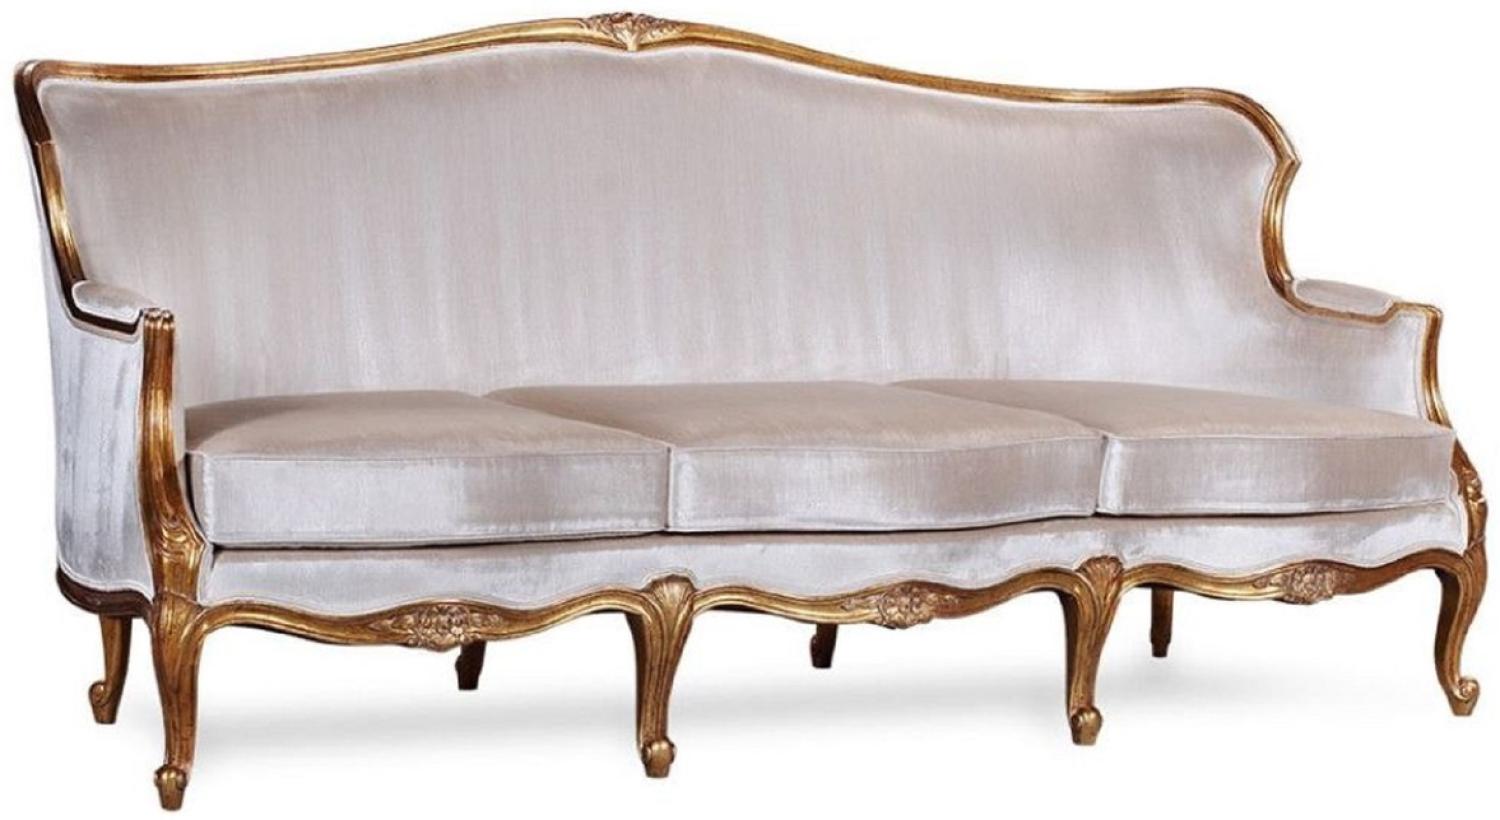 Casa Padrino Luxus Barock Sofa Silber / Antik Gold - Prunkvolles Wohnzimmer Sofa im Barockstil - Barock Wohnzimmer Möbel - Edel & Prunkvoll Bild 1